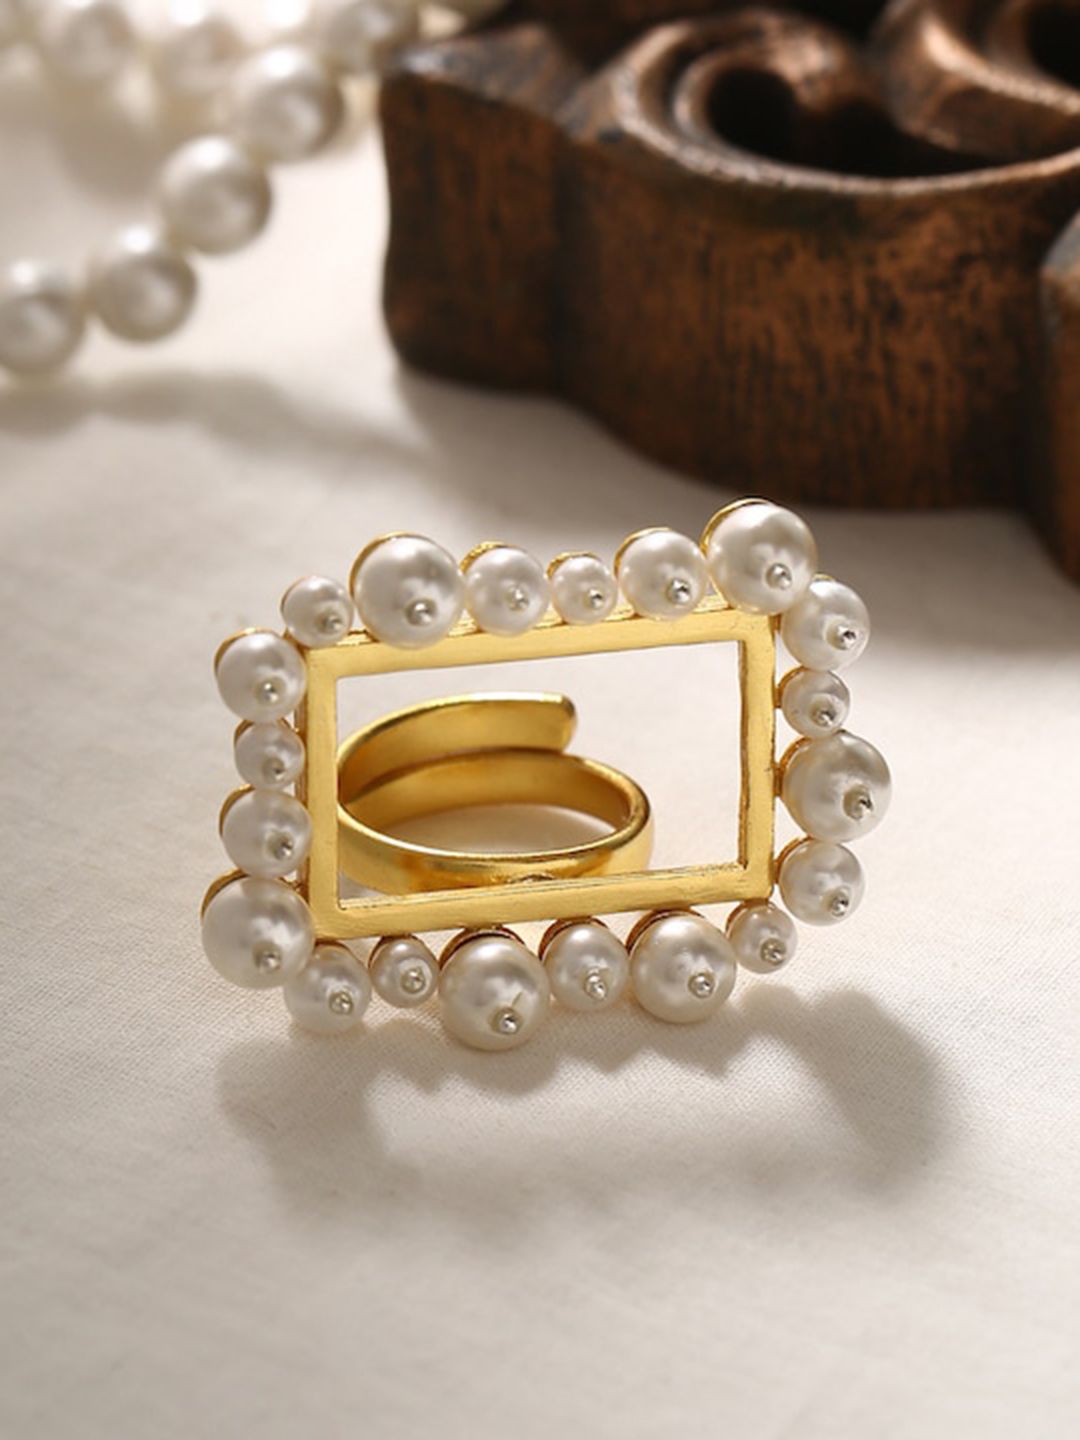 Mitali Jain Gold-Plated Margaret Finger Ring Price in India